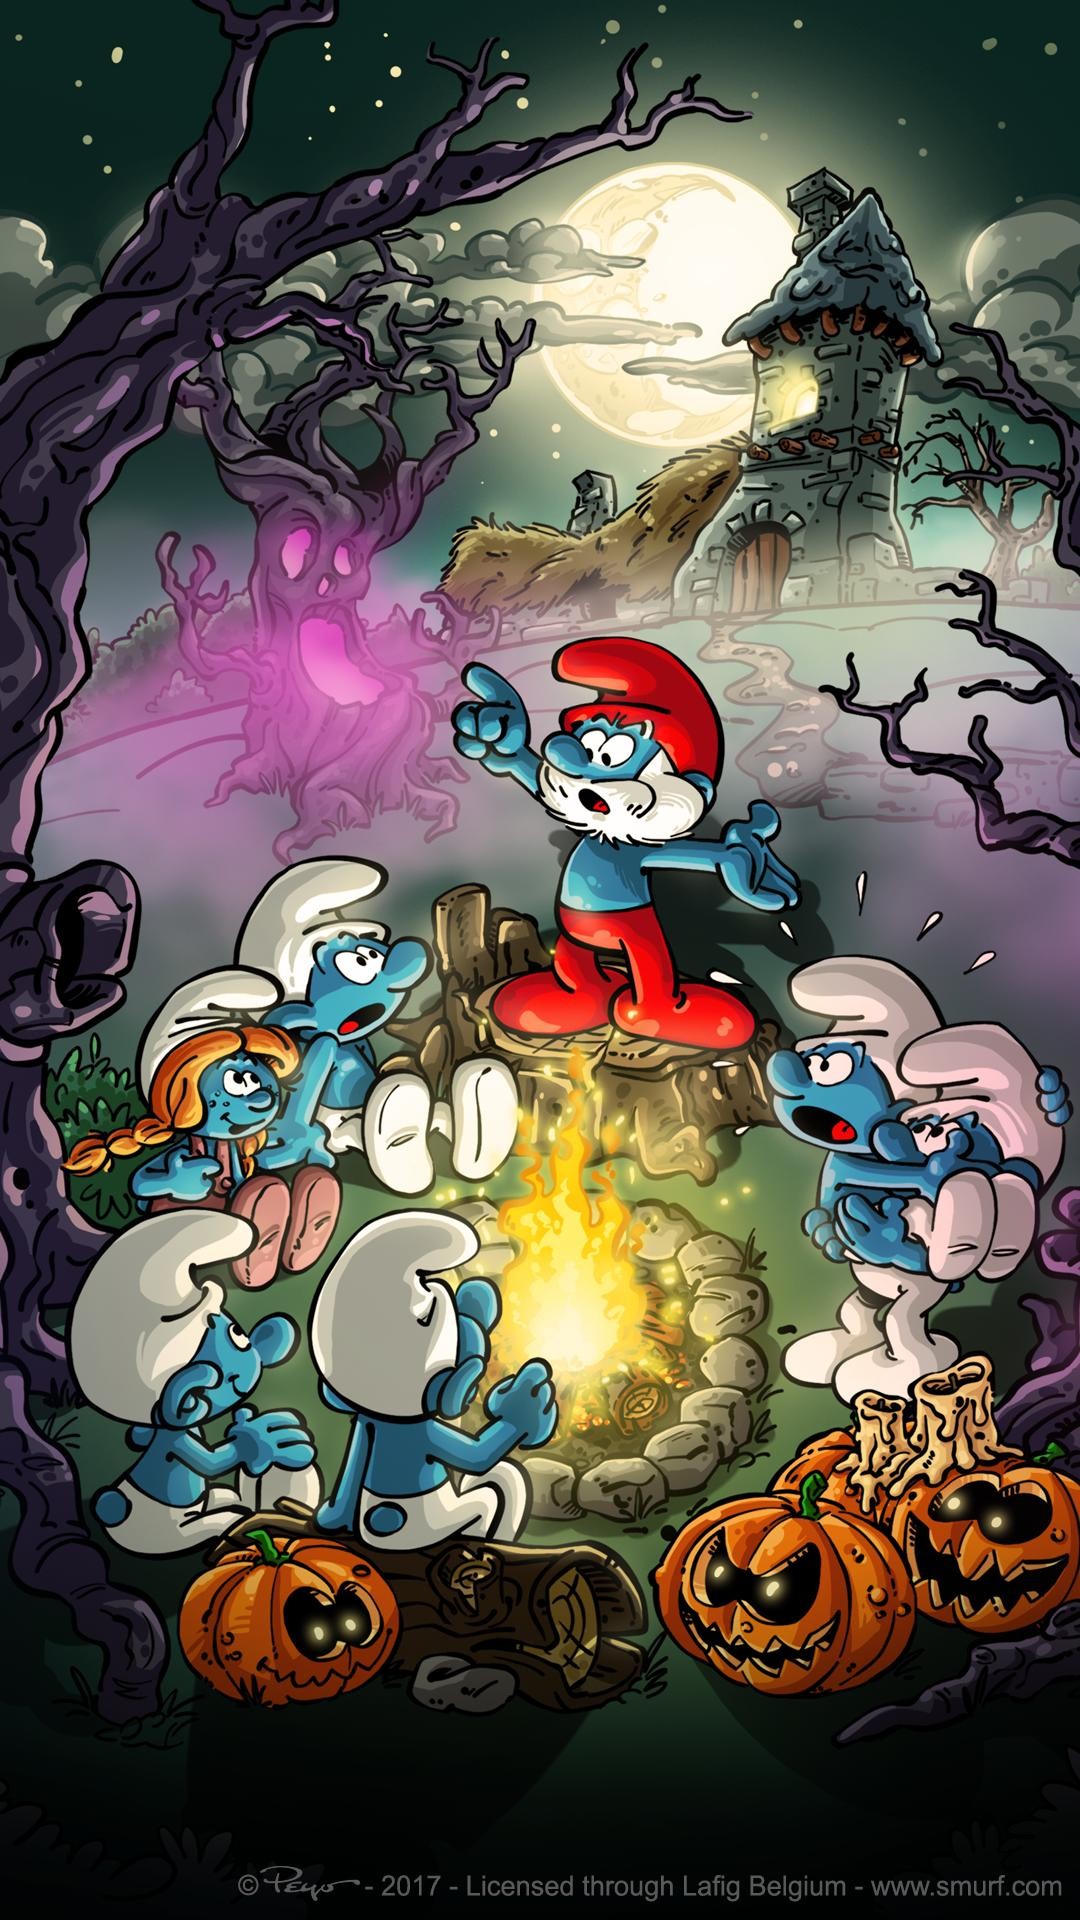 1080x1920 Get your original Smurfs' Village Halloween 2017 Wallpaper here!